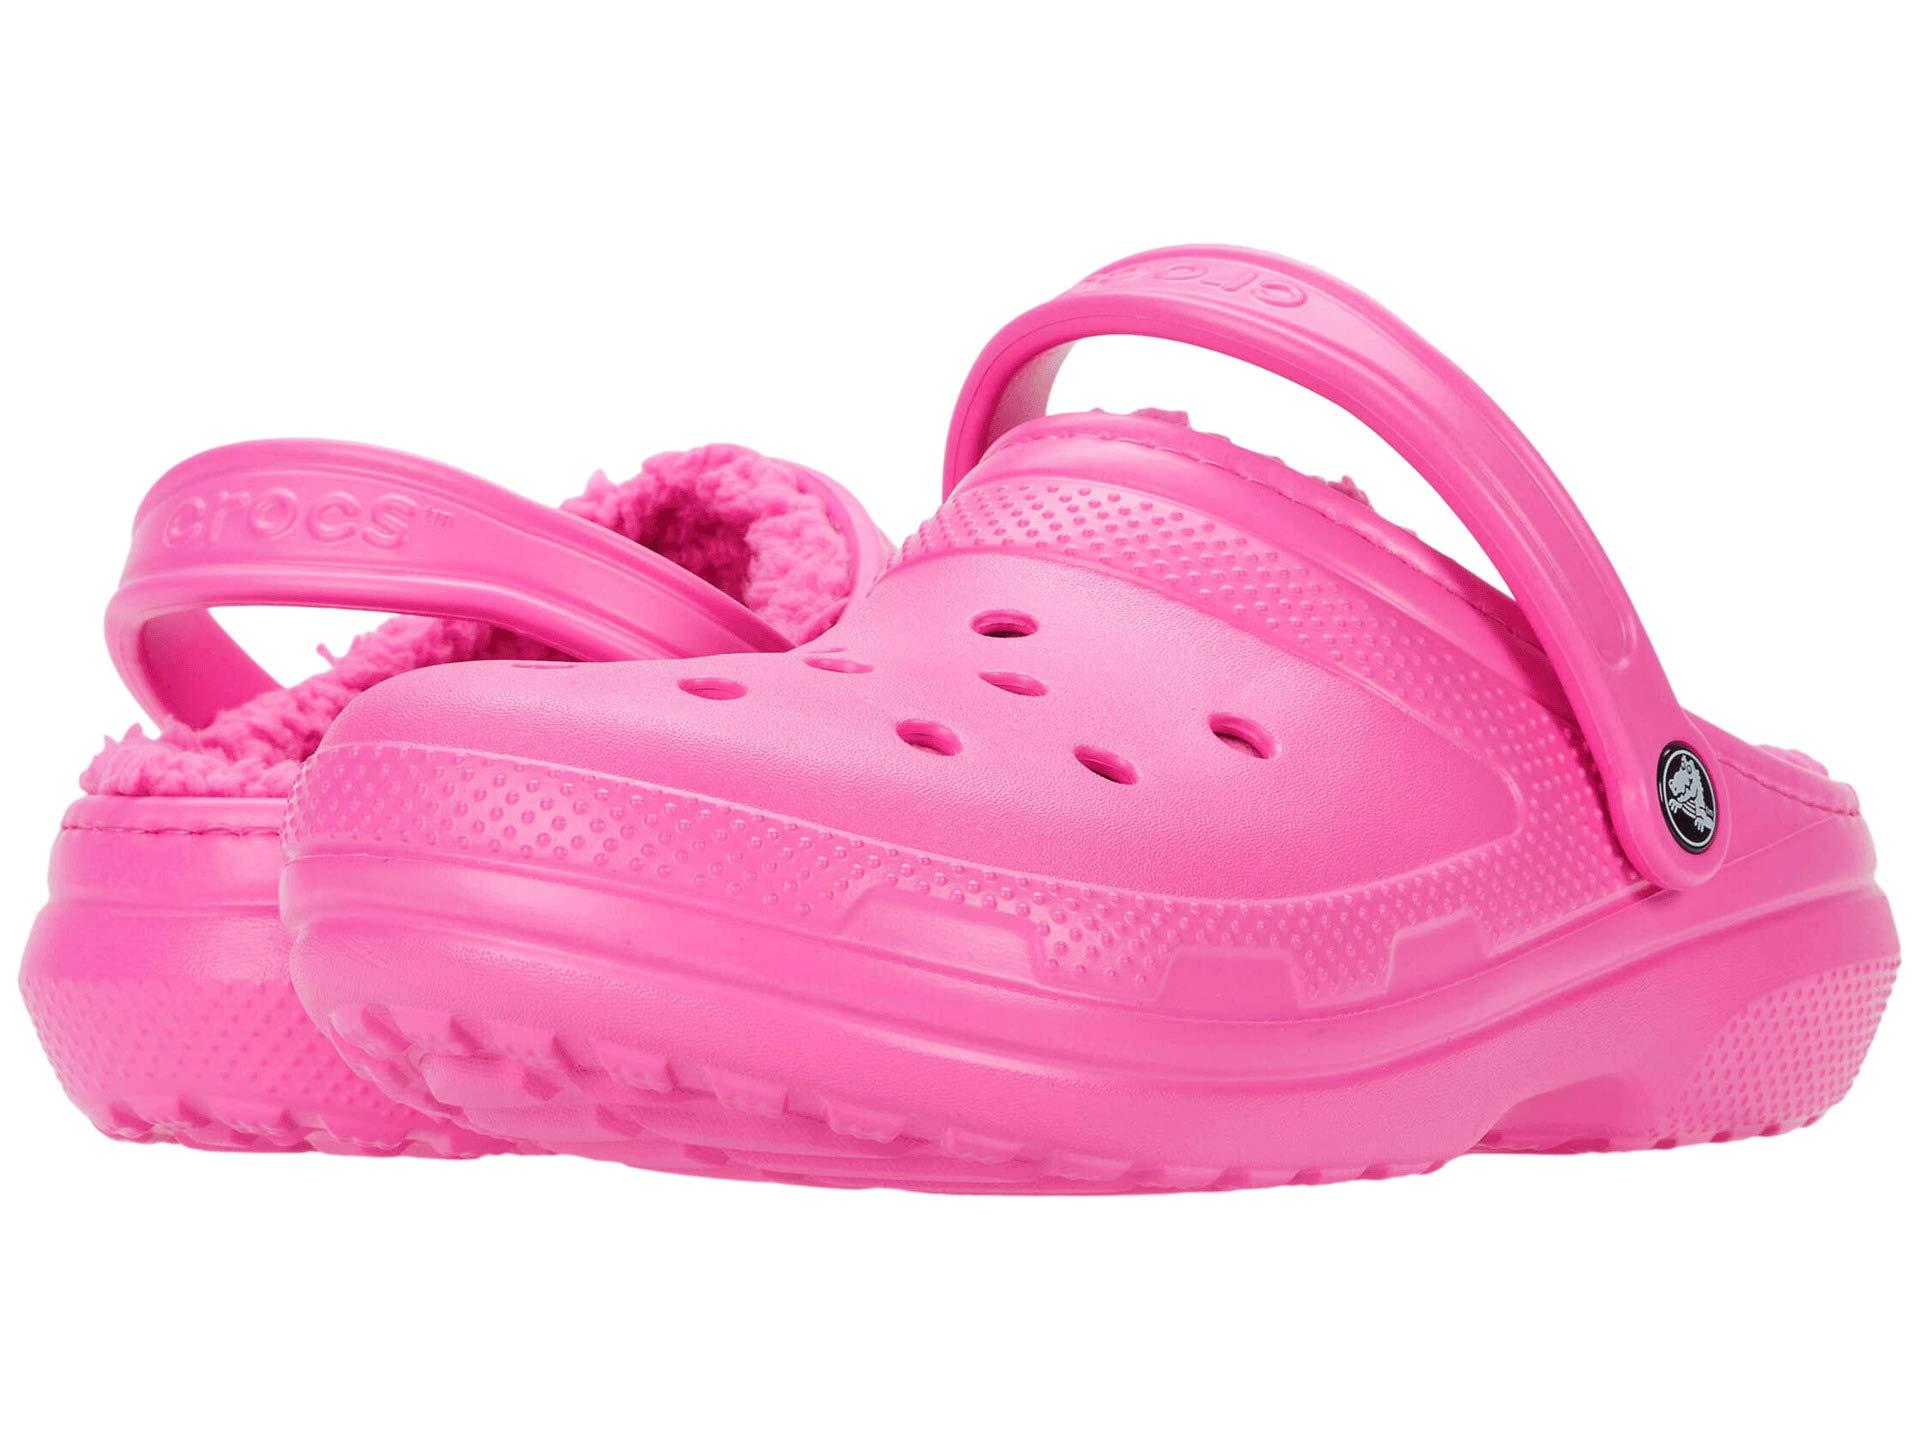 pink crocs with pink fur